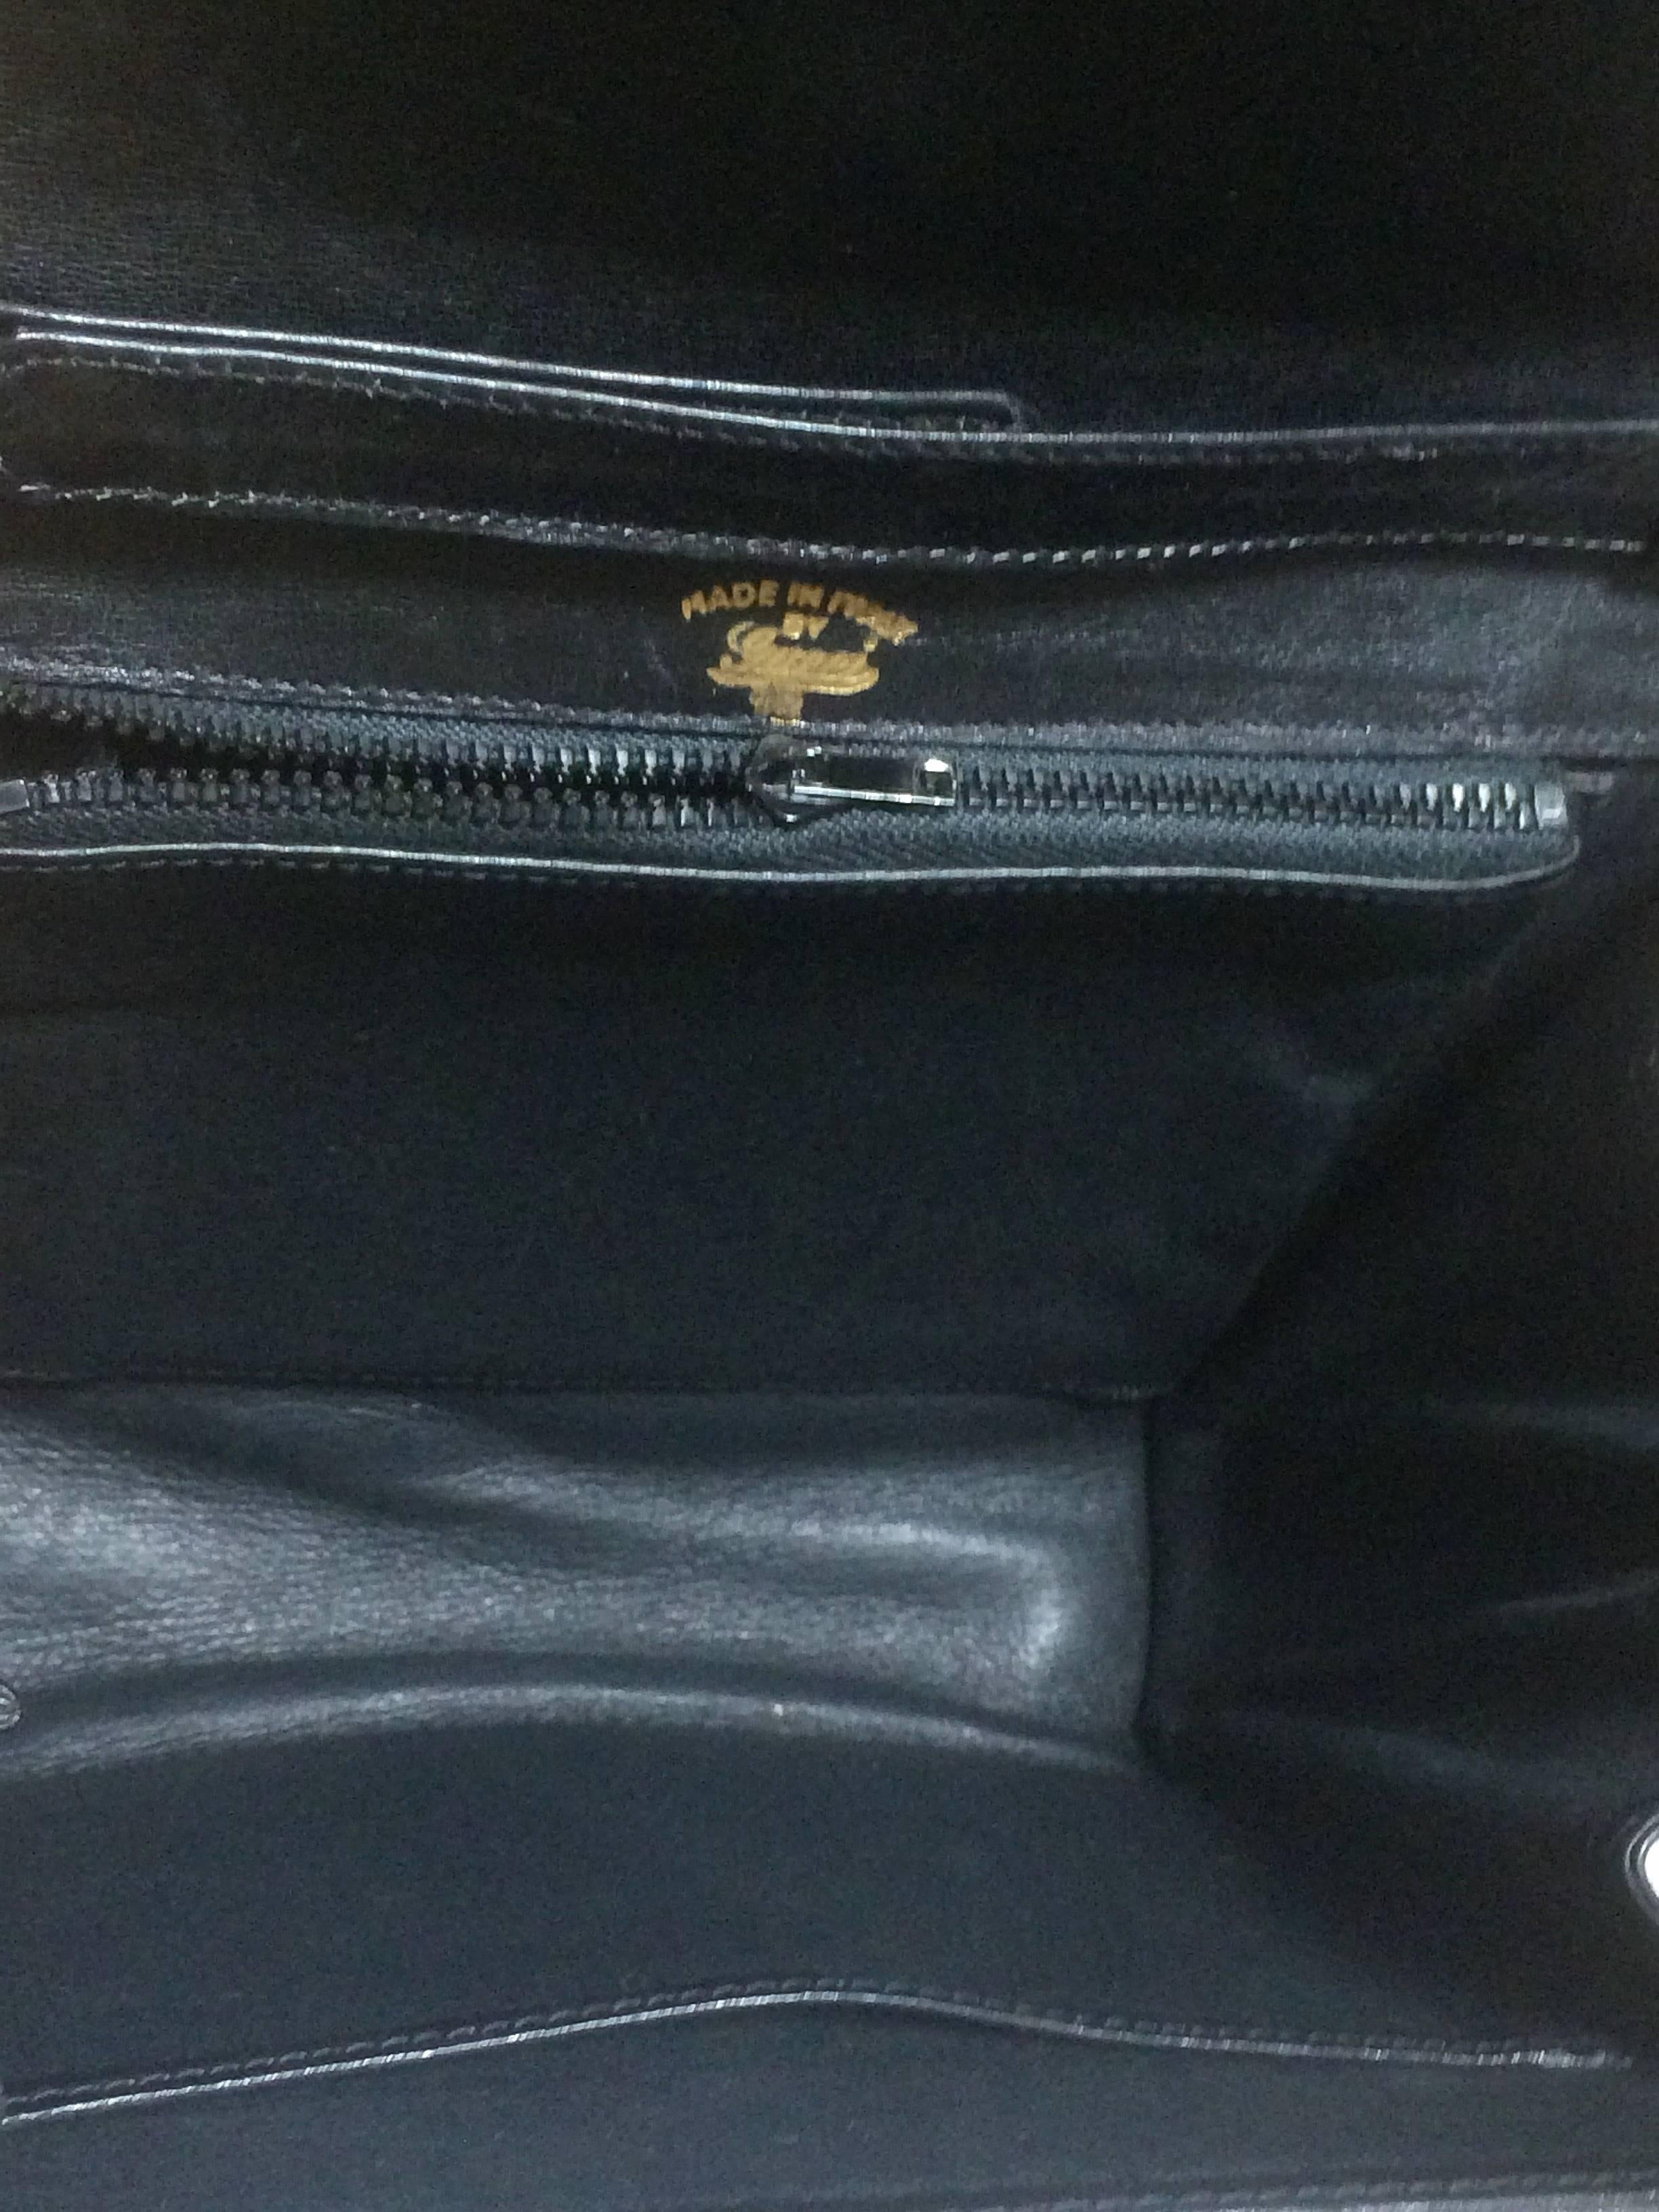 Women's 80’s Vintage Gucci black leather clutch shoulder bag with logo motif closure.